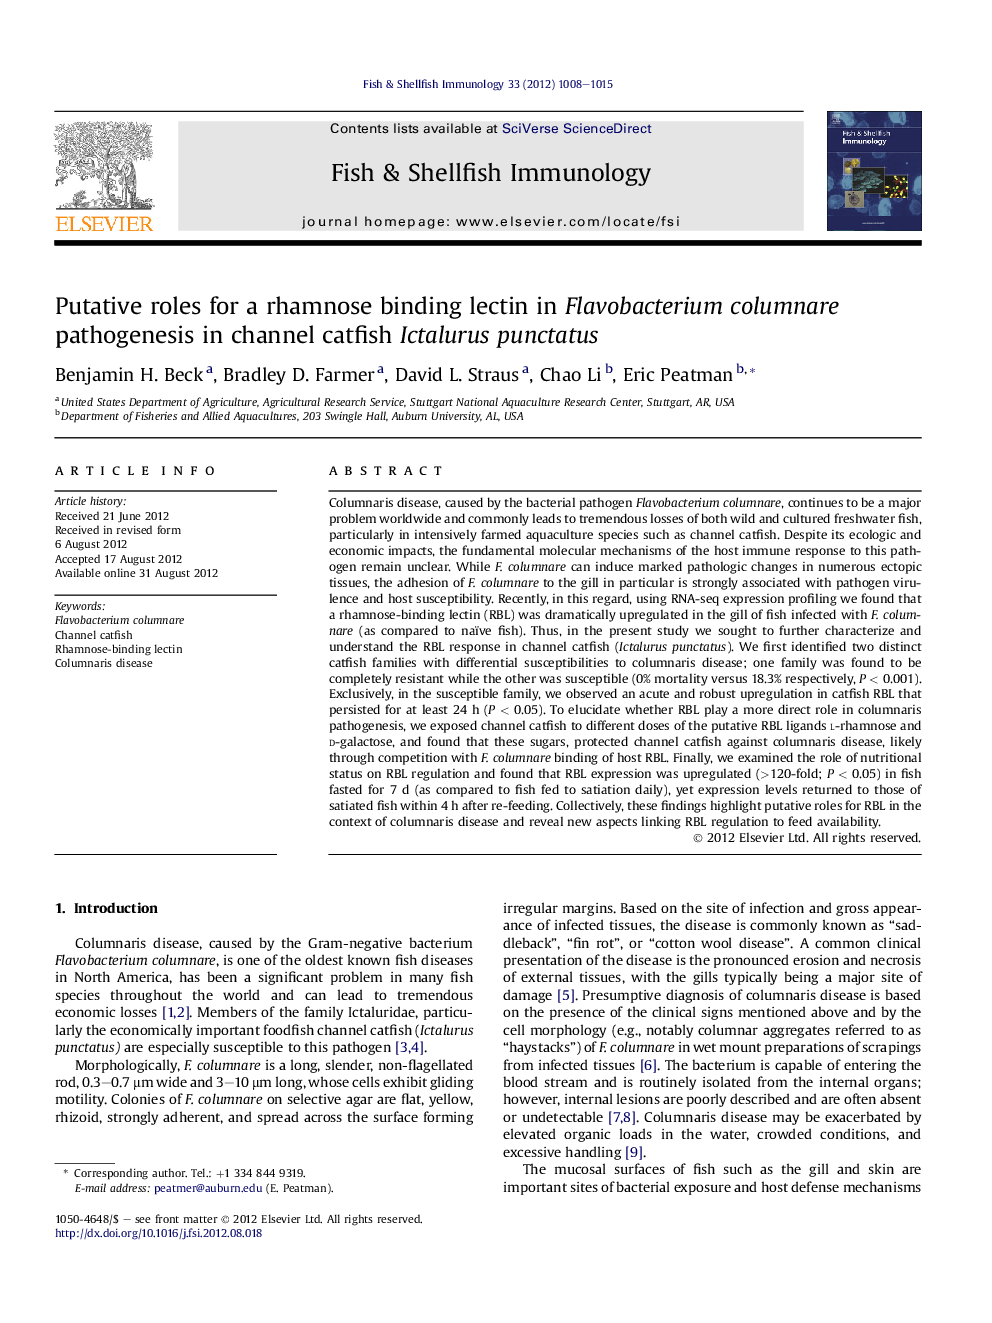 Putative roles for a rhamnose binding lectin in Flavobacterium columnare pathogenesis in channel catfish Ictalurus punctatus